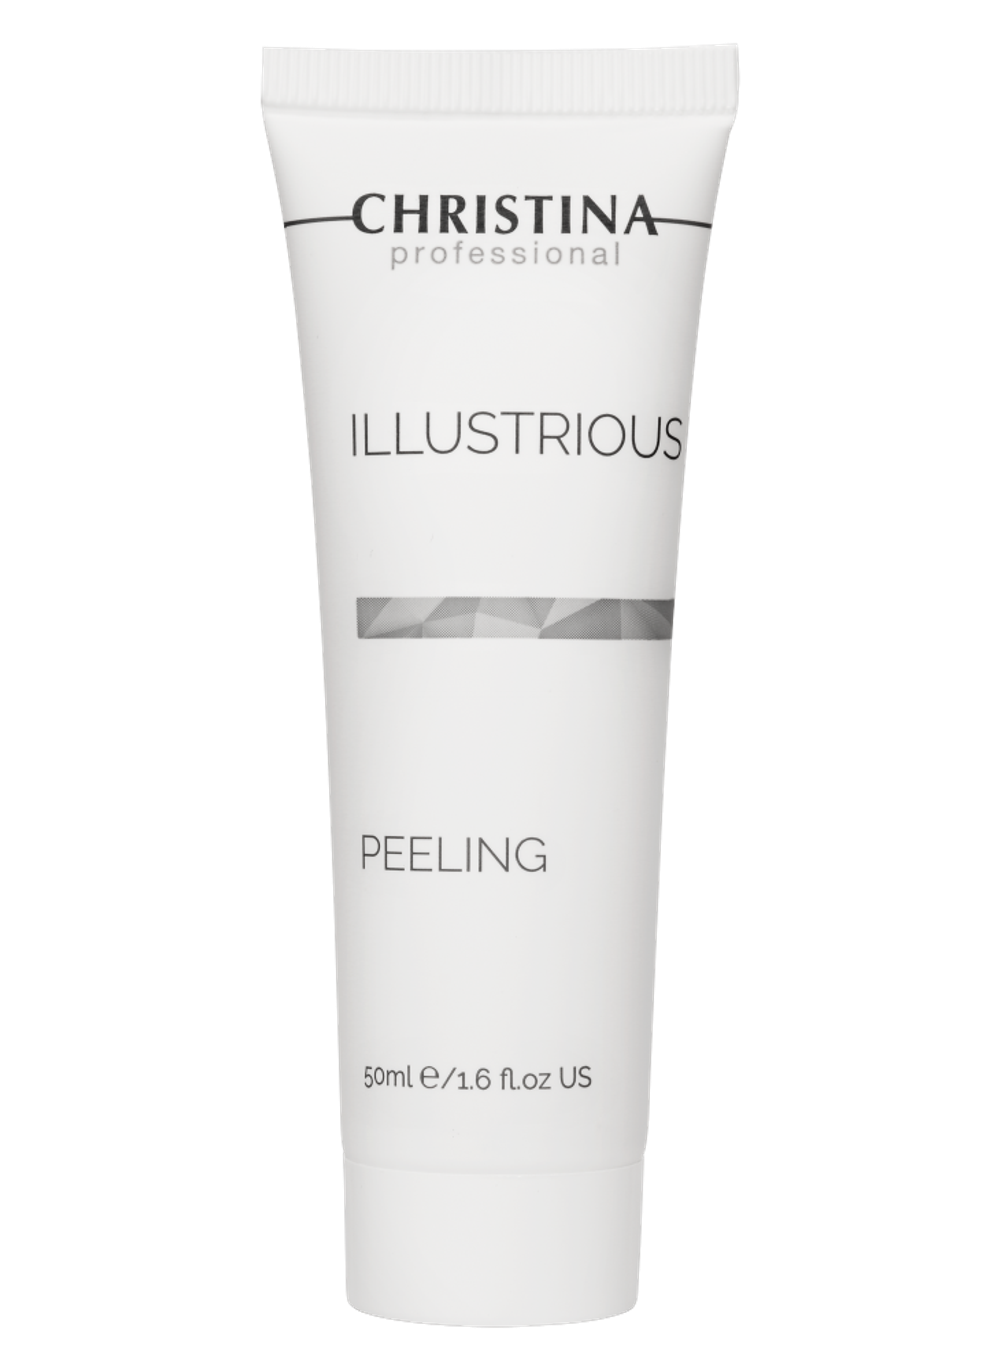 CHRISTINA Illustrious Peeling